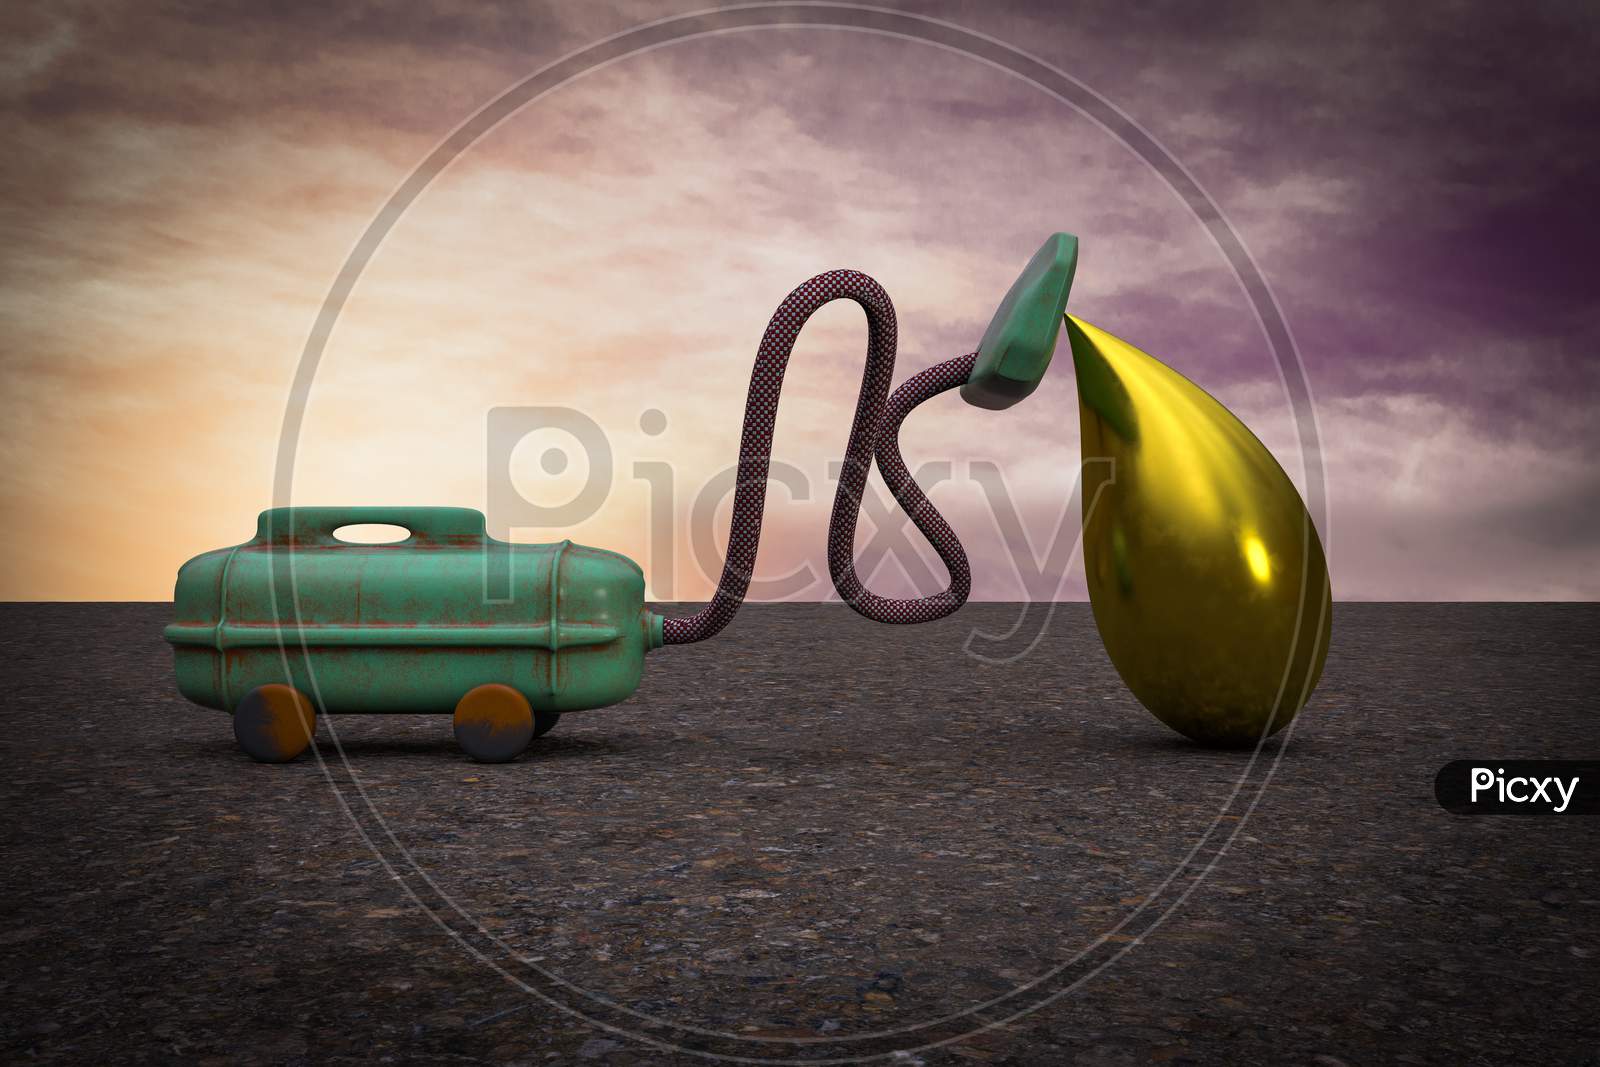 Vacuum Cleaner Sucking Golden Egg At Sunset Magenta Day Demonstrating Losing Retirement Concept. 3D Illustration